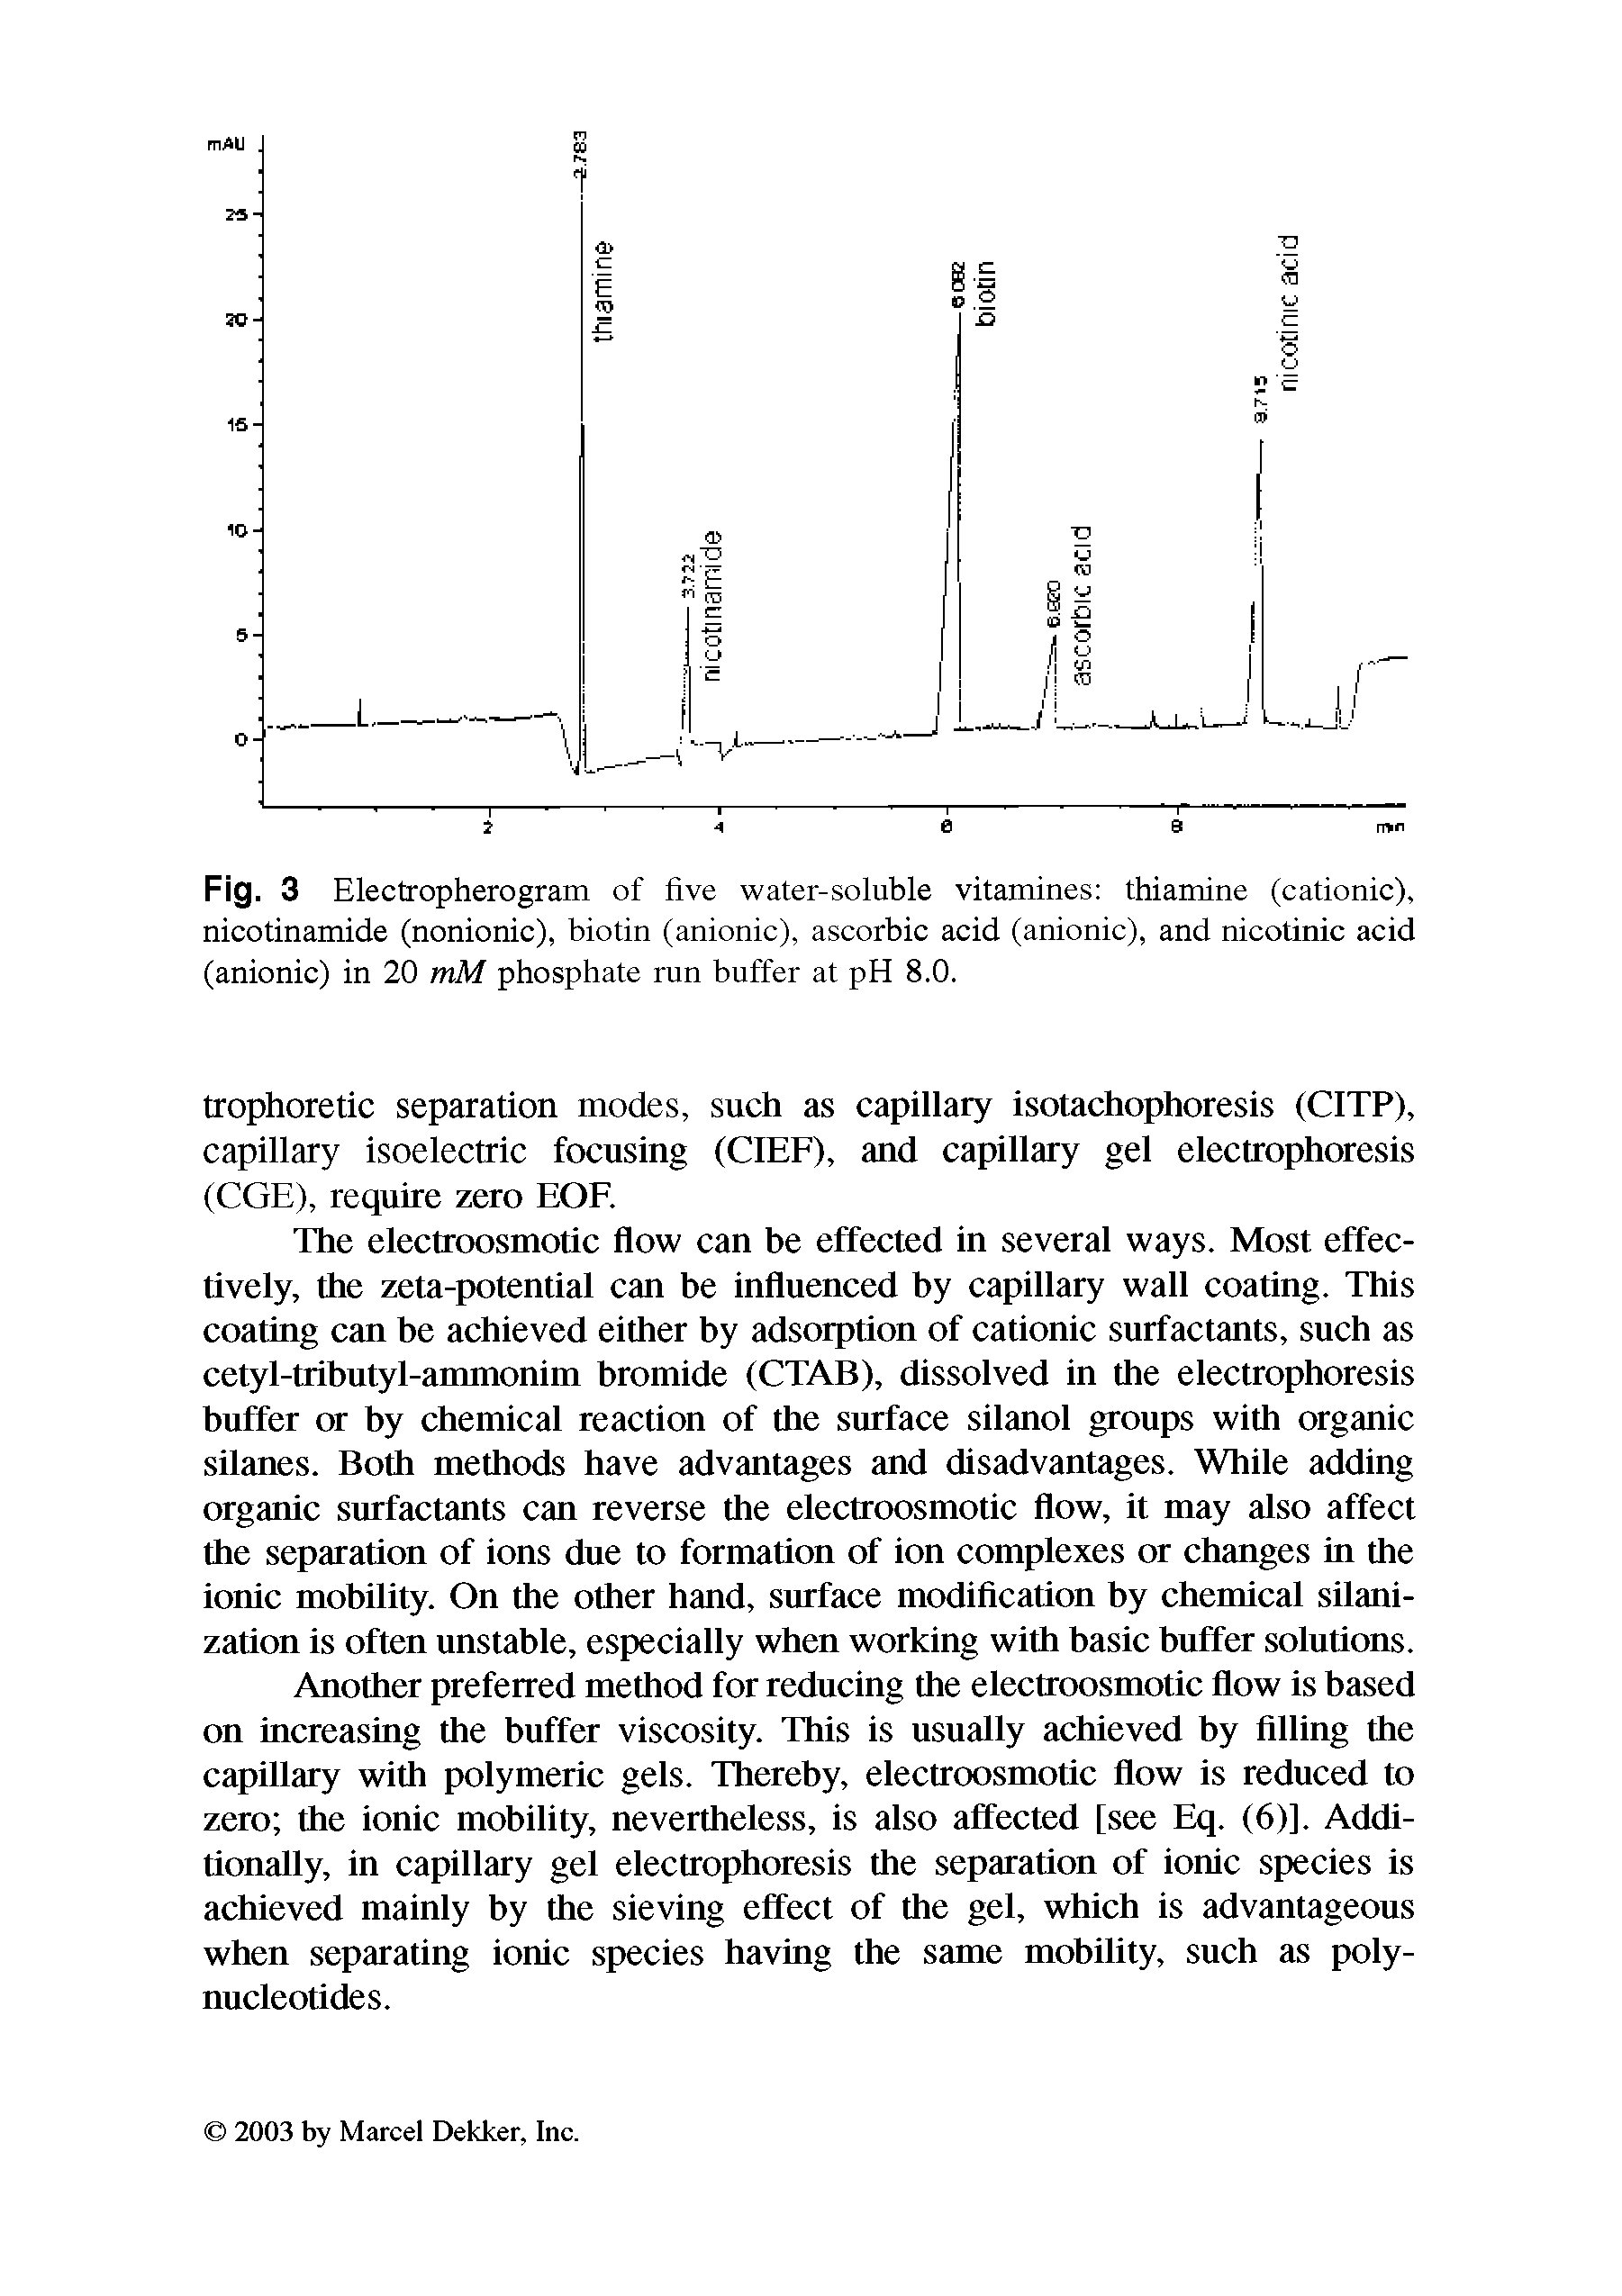 Fig. 3 Electropherogram of five water-soluble vitamines thiamine (cationic), nicotinamide (nonionic), biotin (anionic), ascorbic acid (anionic), and nicotinic acid (anionic) in 20 mM phosphate run buffer at pH 8.0.